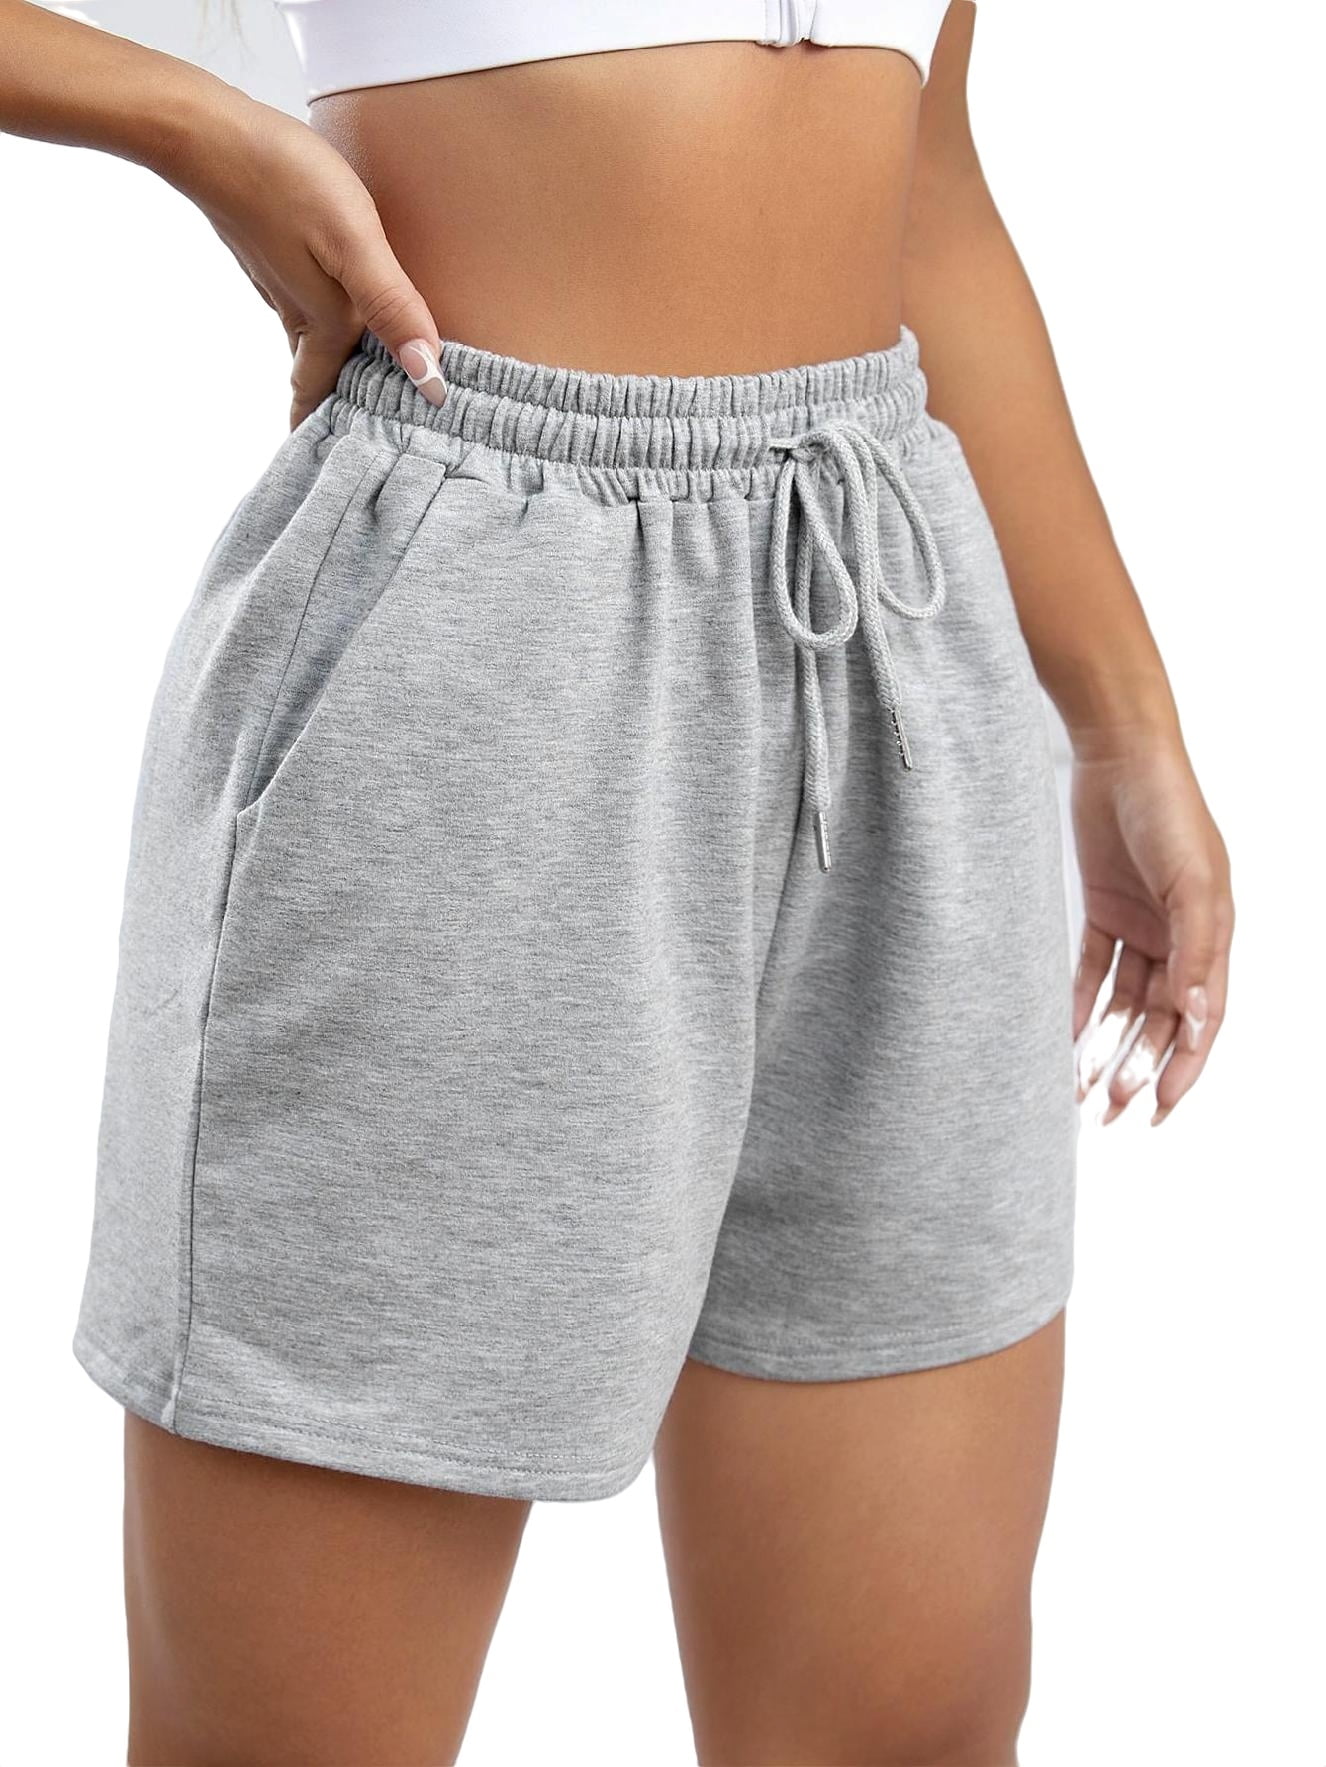 Womens Activewear Sports Shorts Slight Stretch Solid Shorts Light Grey L 